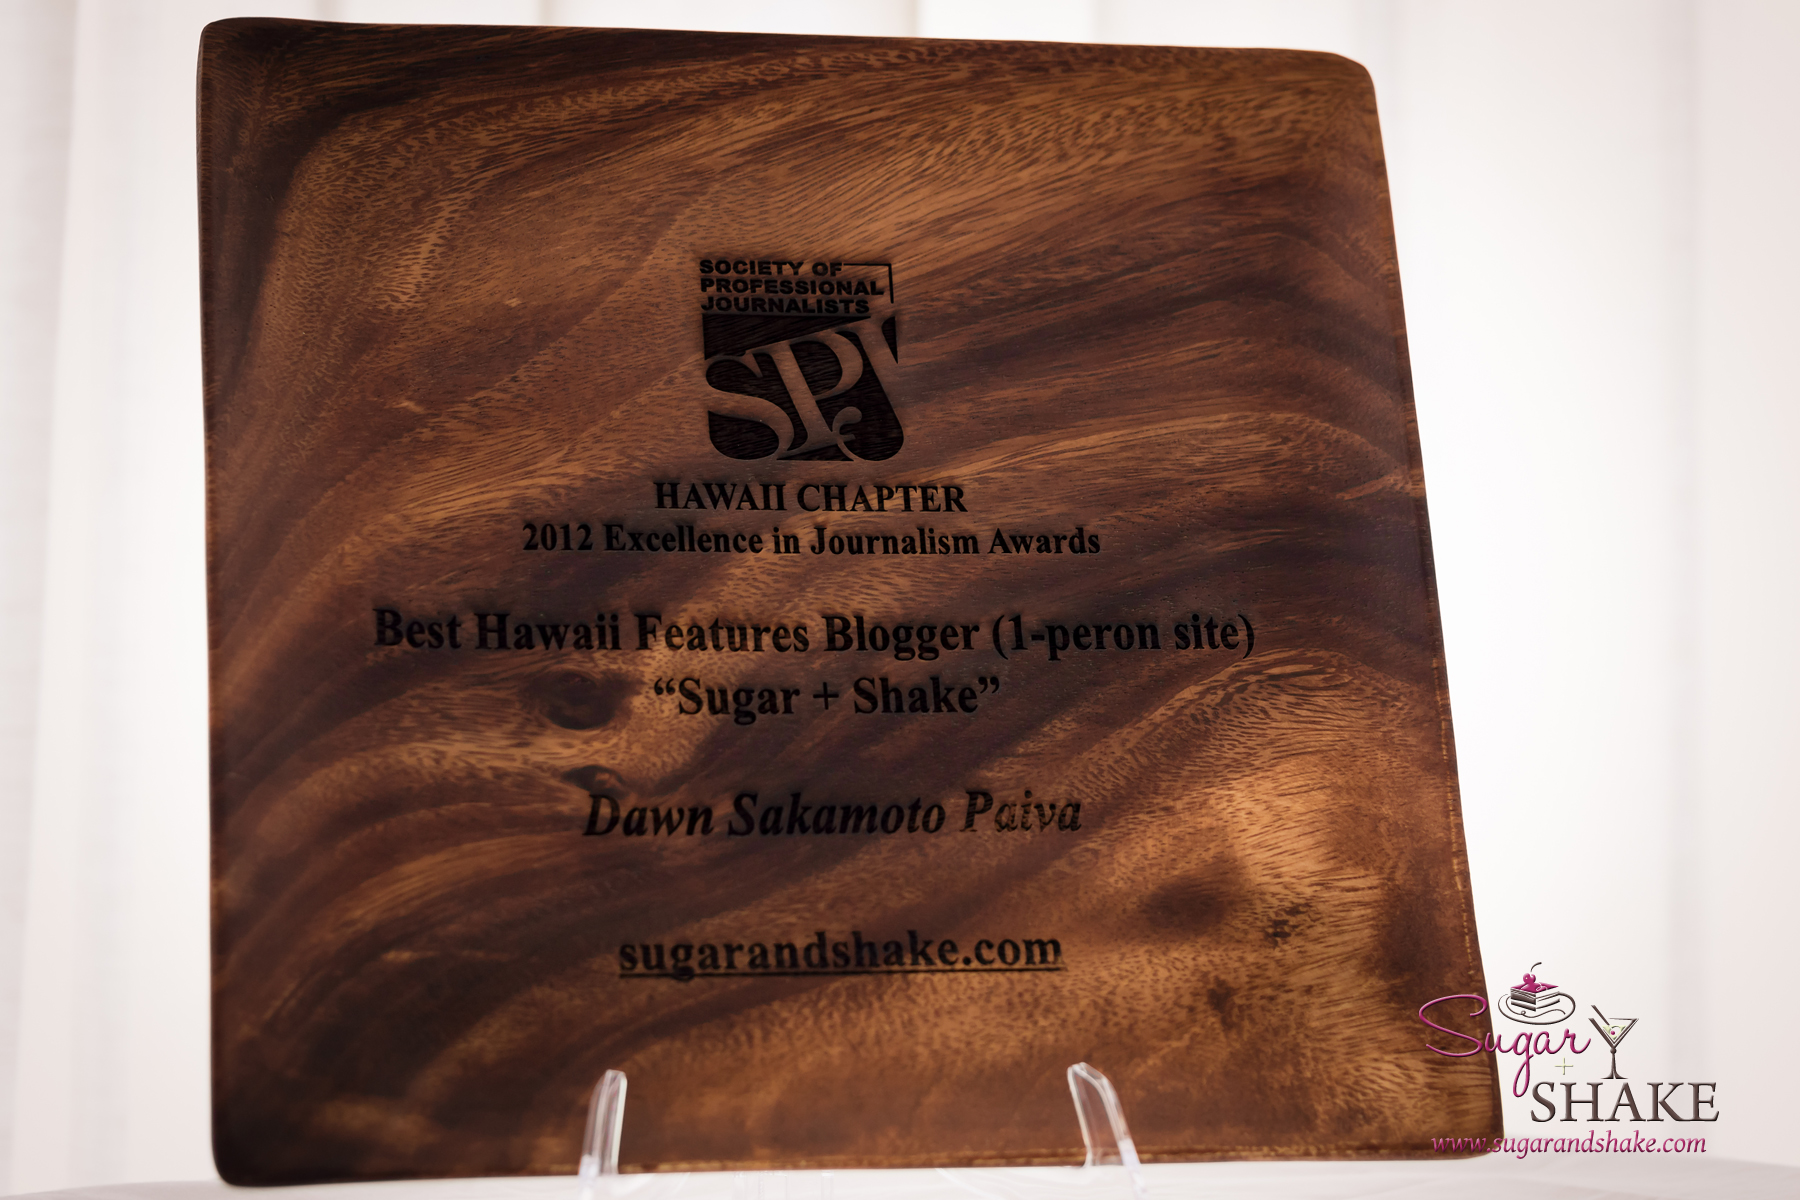 Hawaii Society of Professional Journalists Award 2012: Best Hawaii Features Blog © 2013 Sugar + Shake